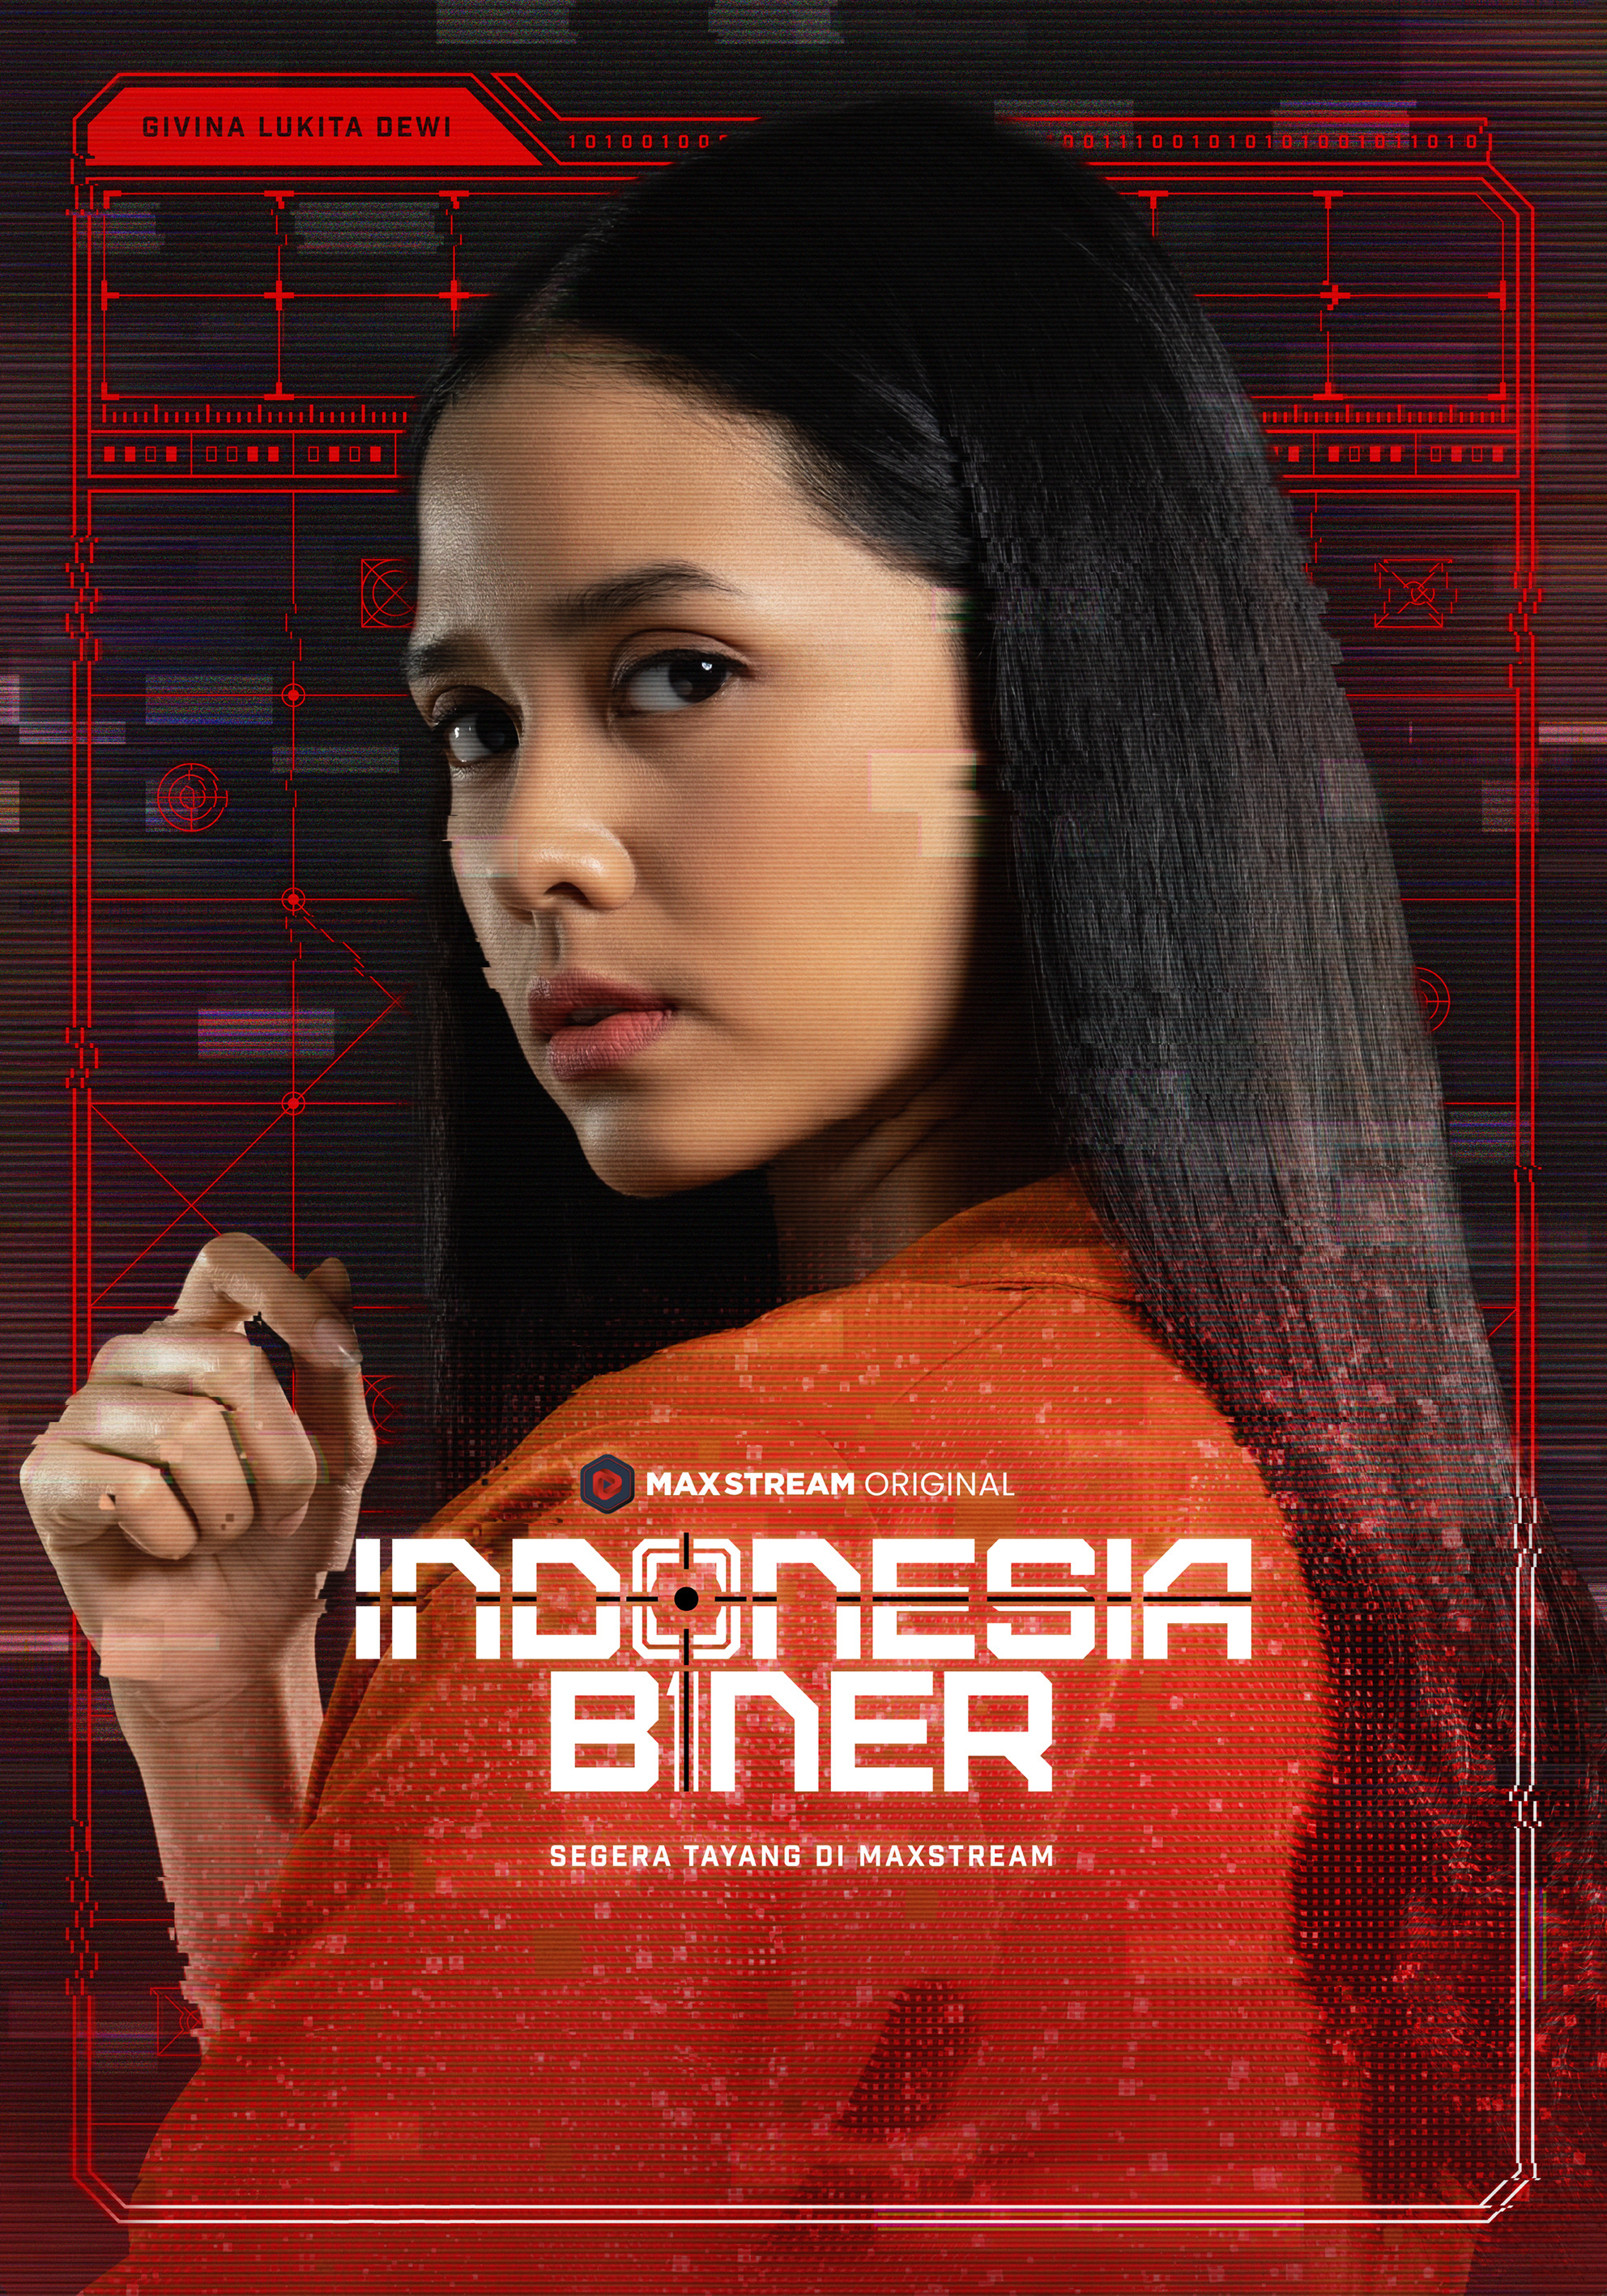 Mega Sized TV Poster Image for Indonesia Biner (#10 of 10)